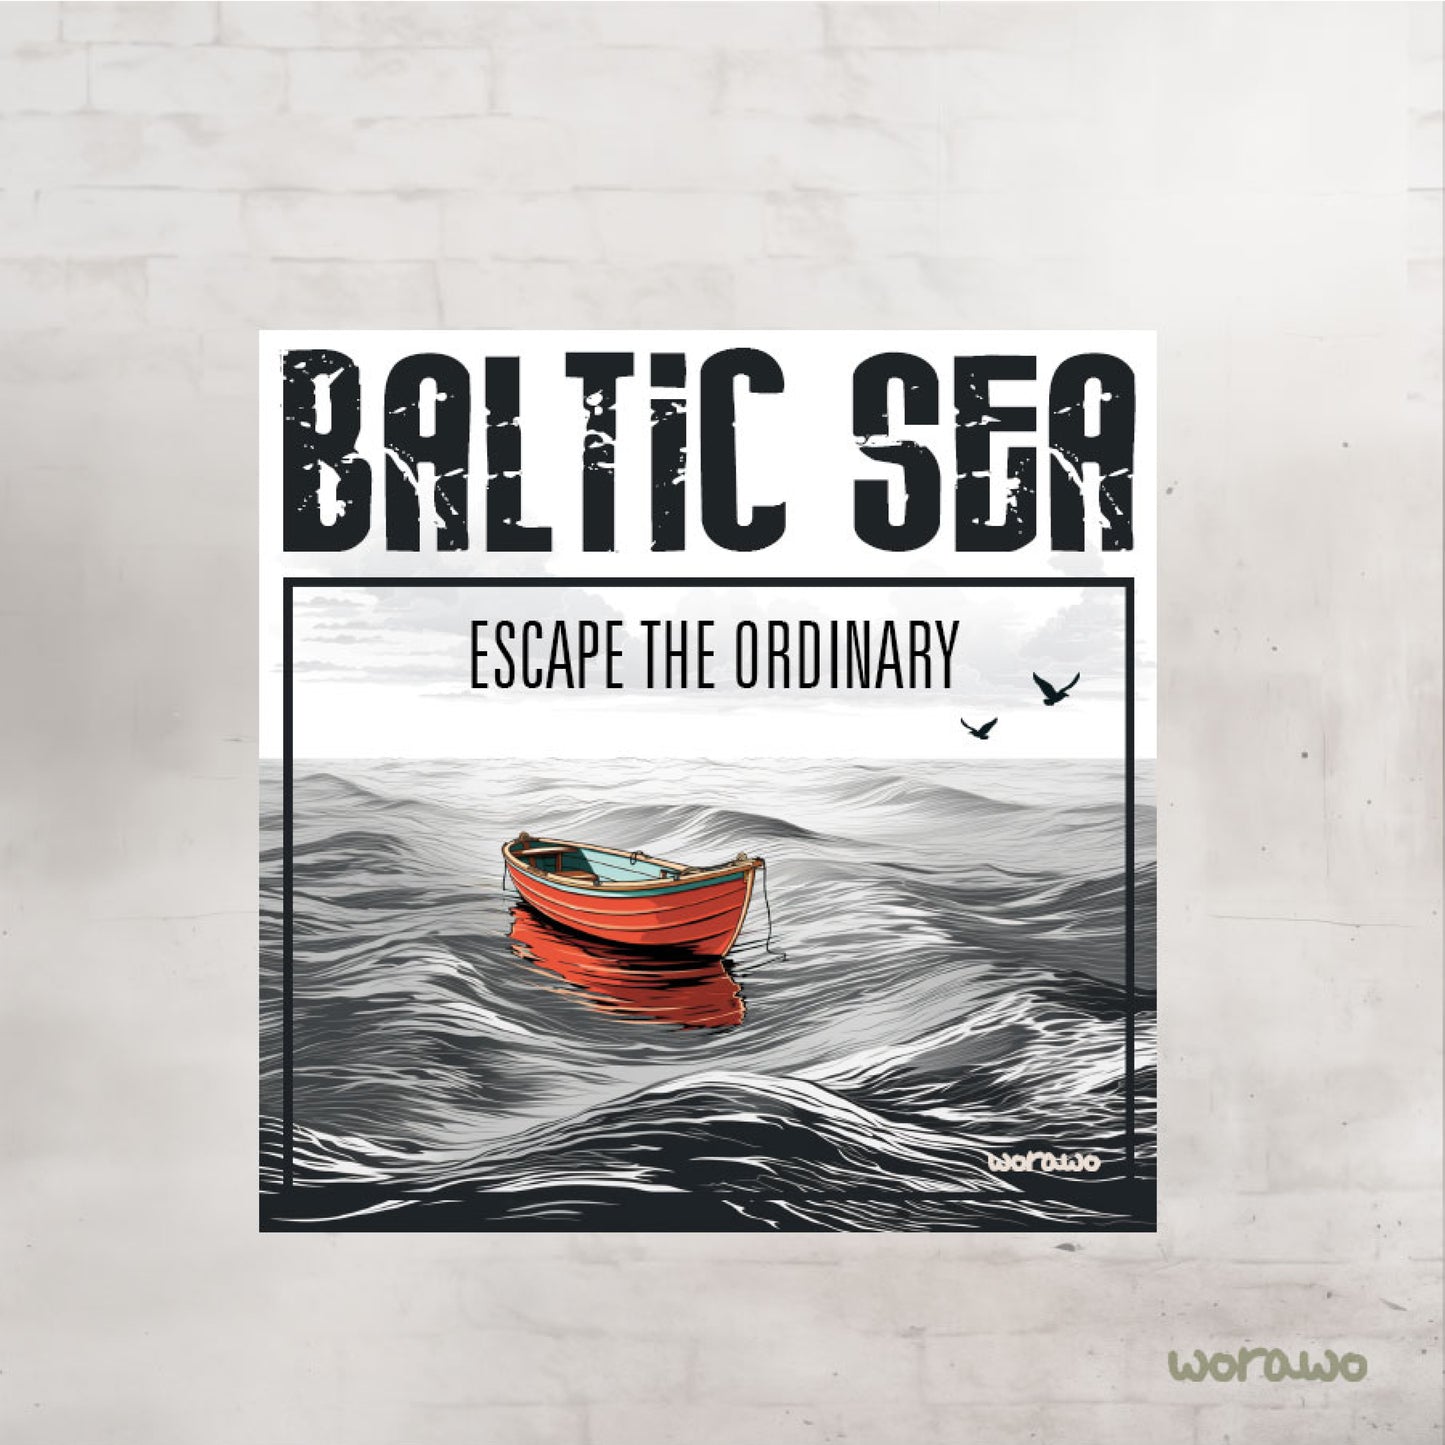 Bügelbild Baltic Sea (Escape the Ordinary)